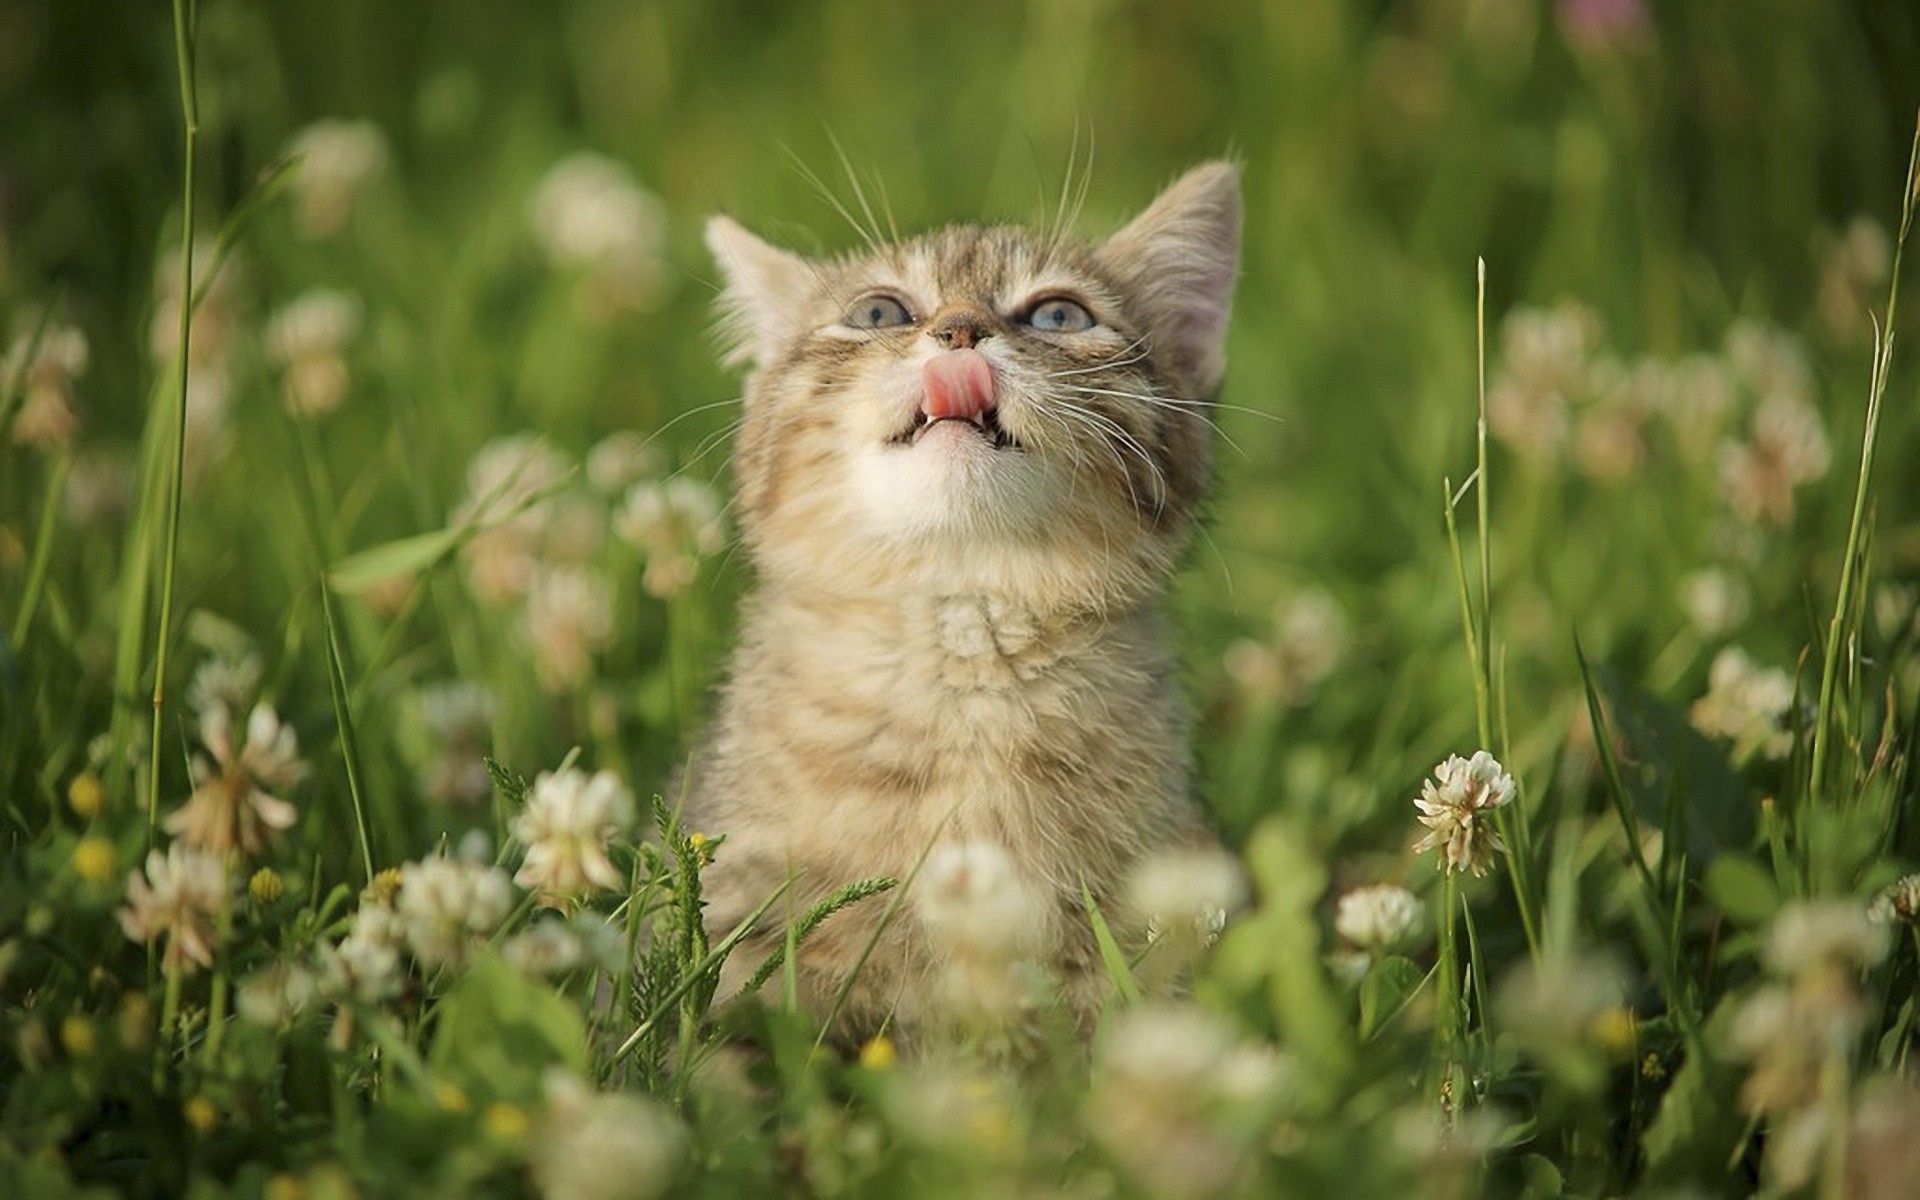 kitty, animals, grass, kitten, language, tongue, lick your lips, licking, curiosity